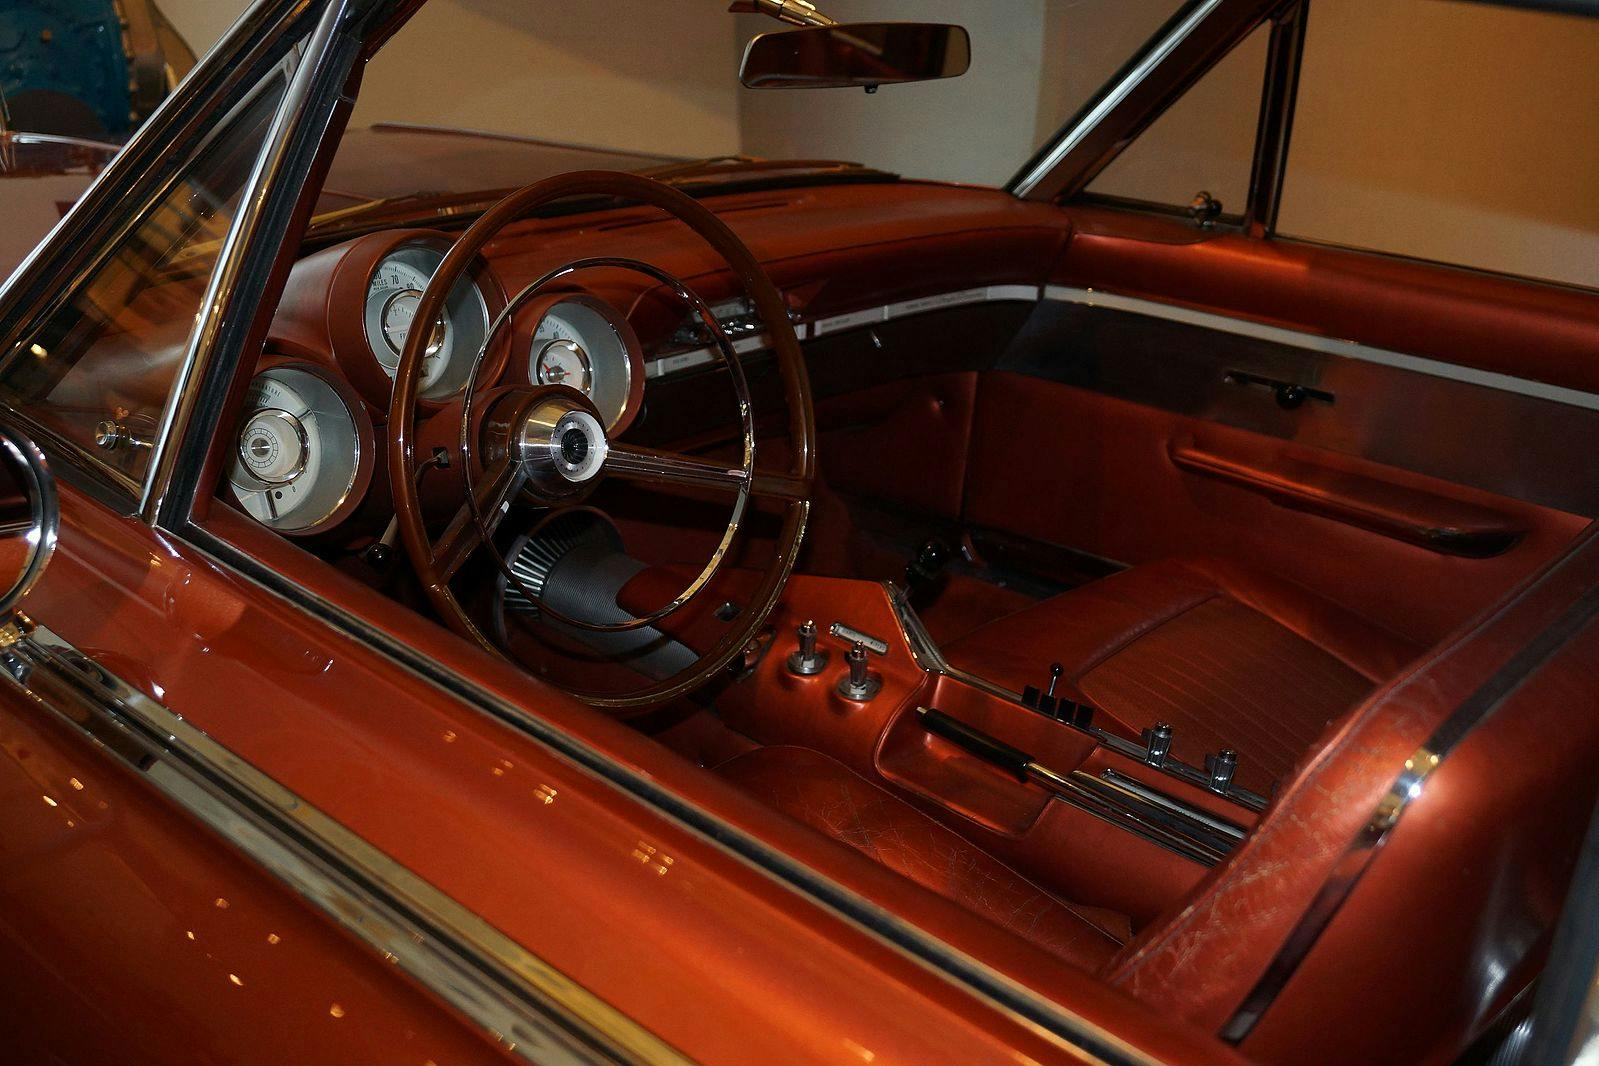 1963 Chrysler turbine car interior